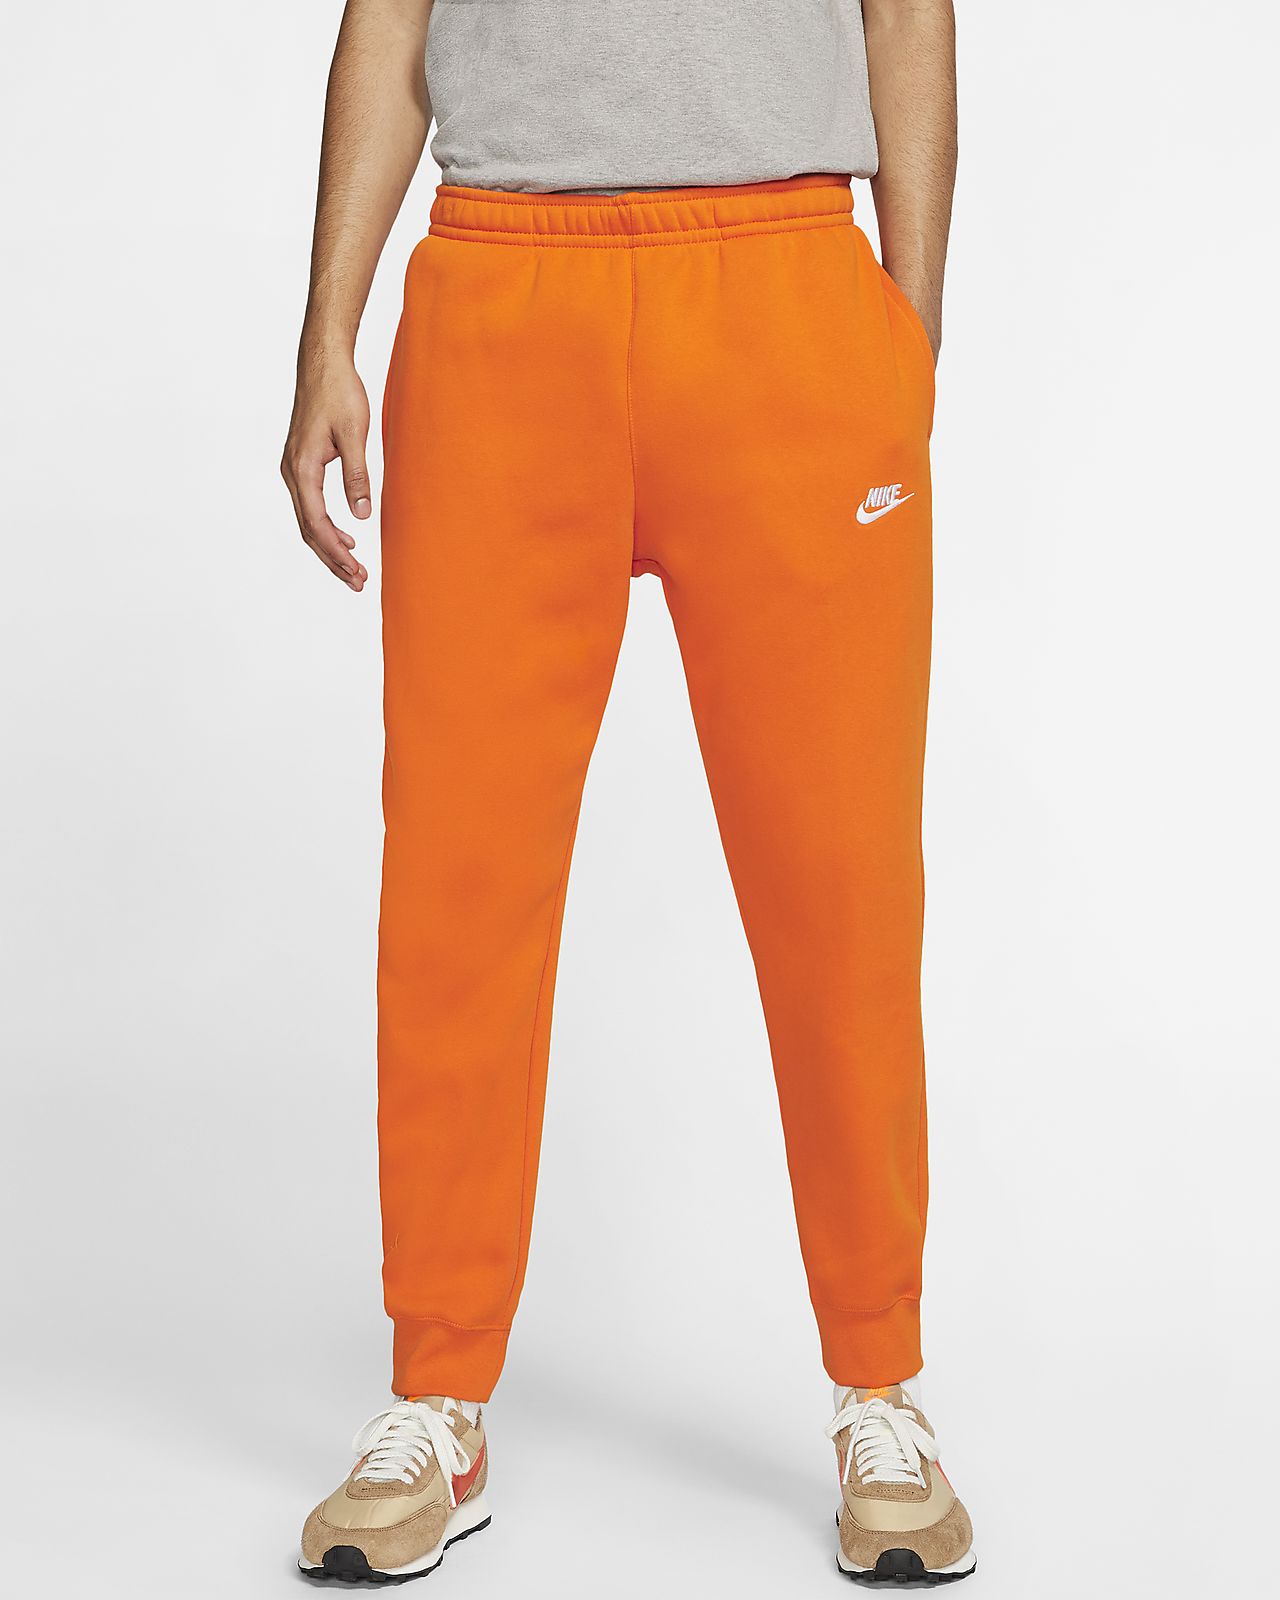 nike joggers orange